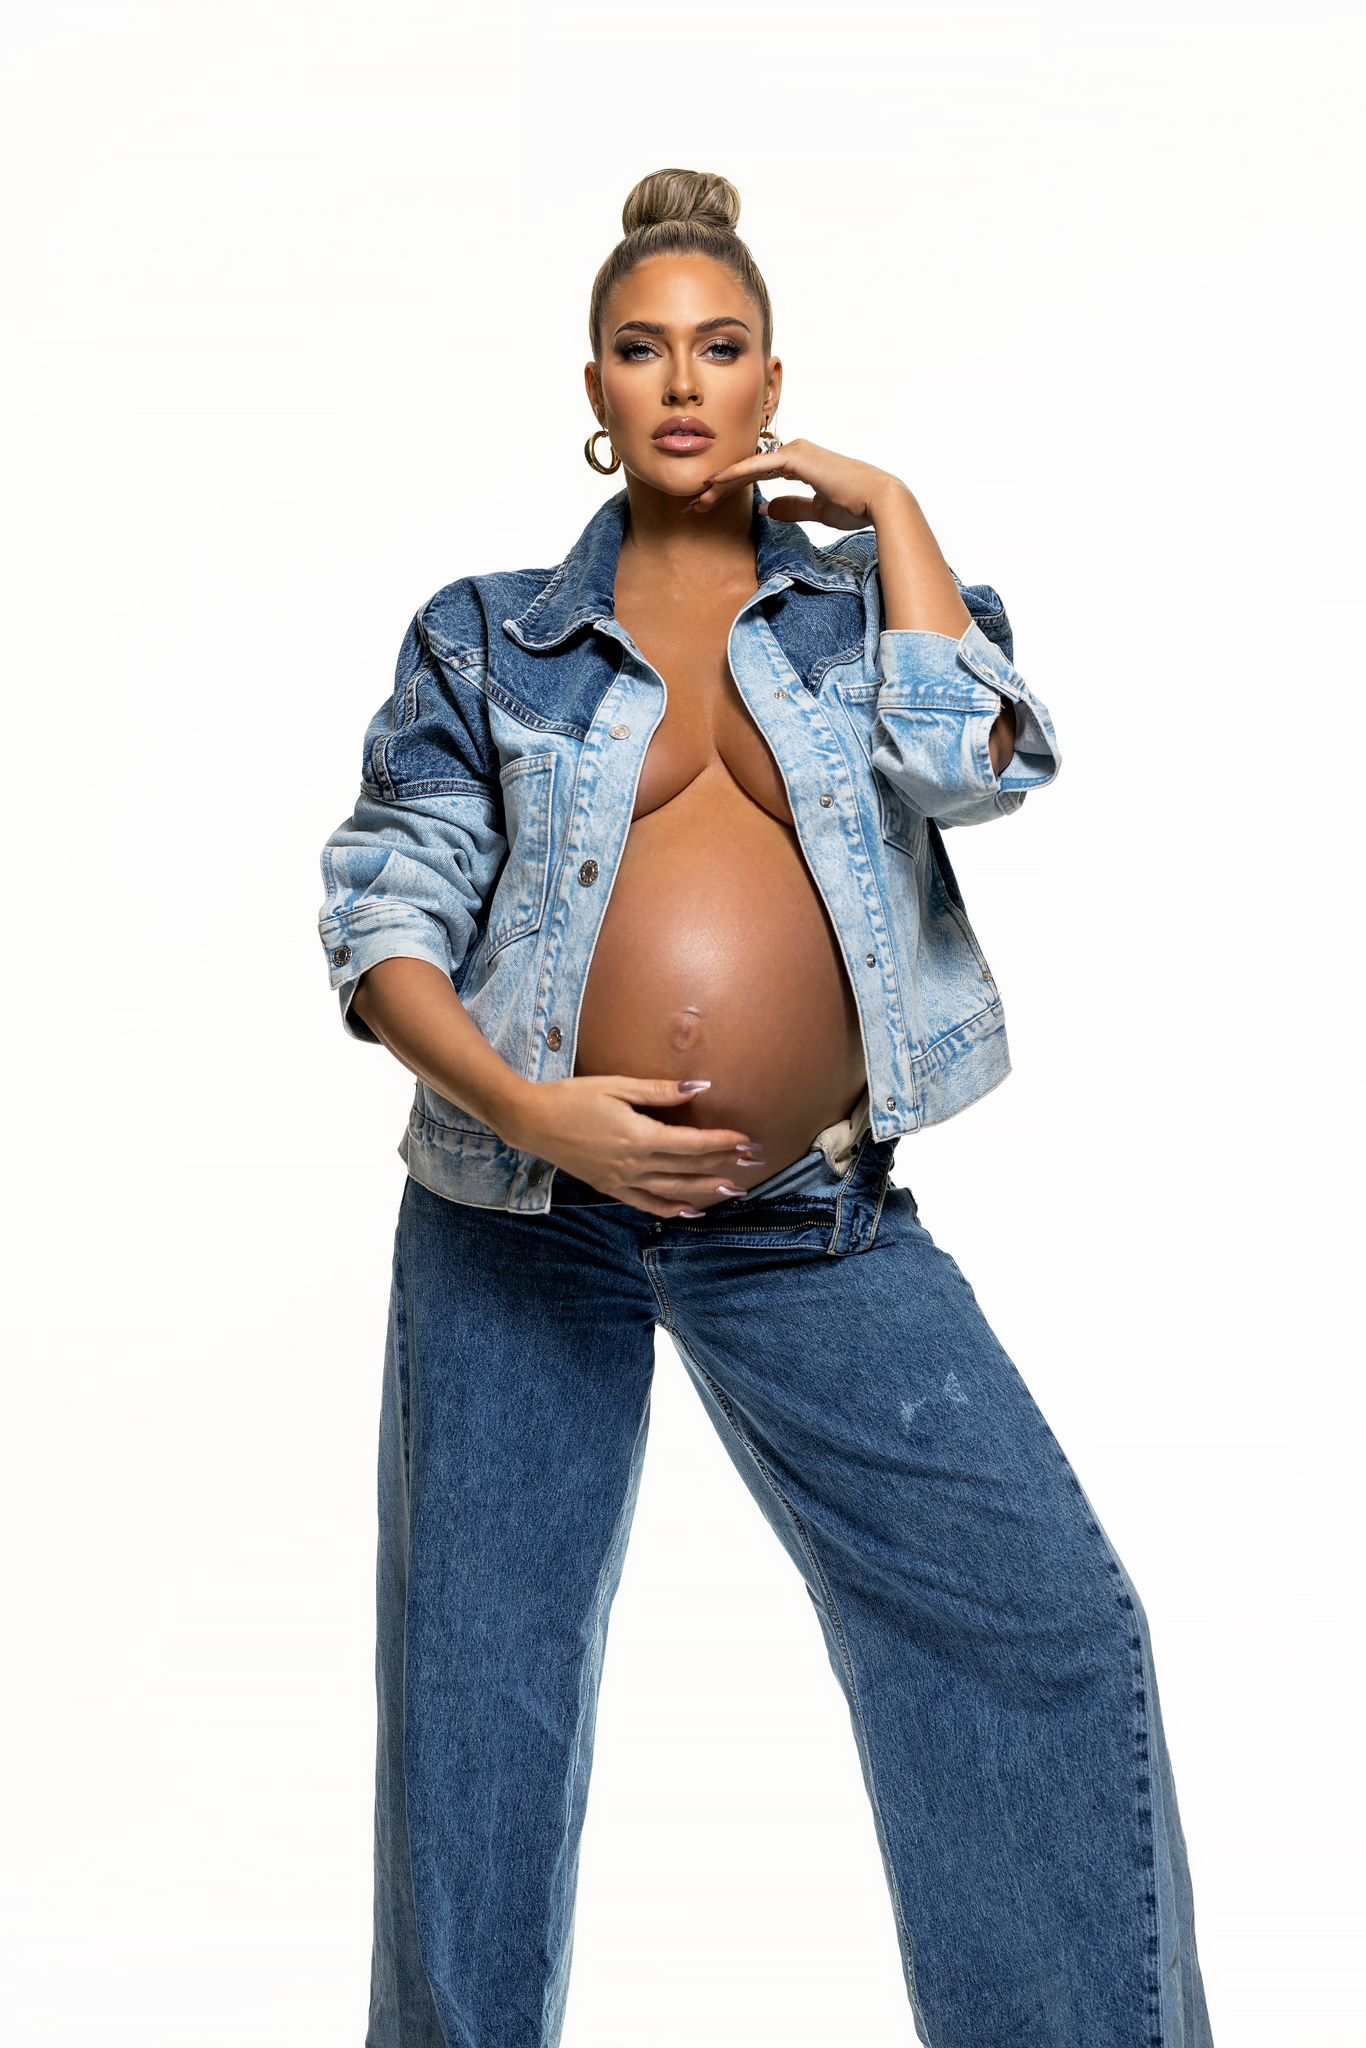 Choose Your Maternity Photoshoot Style